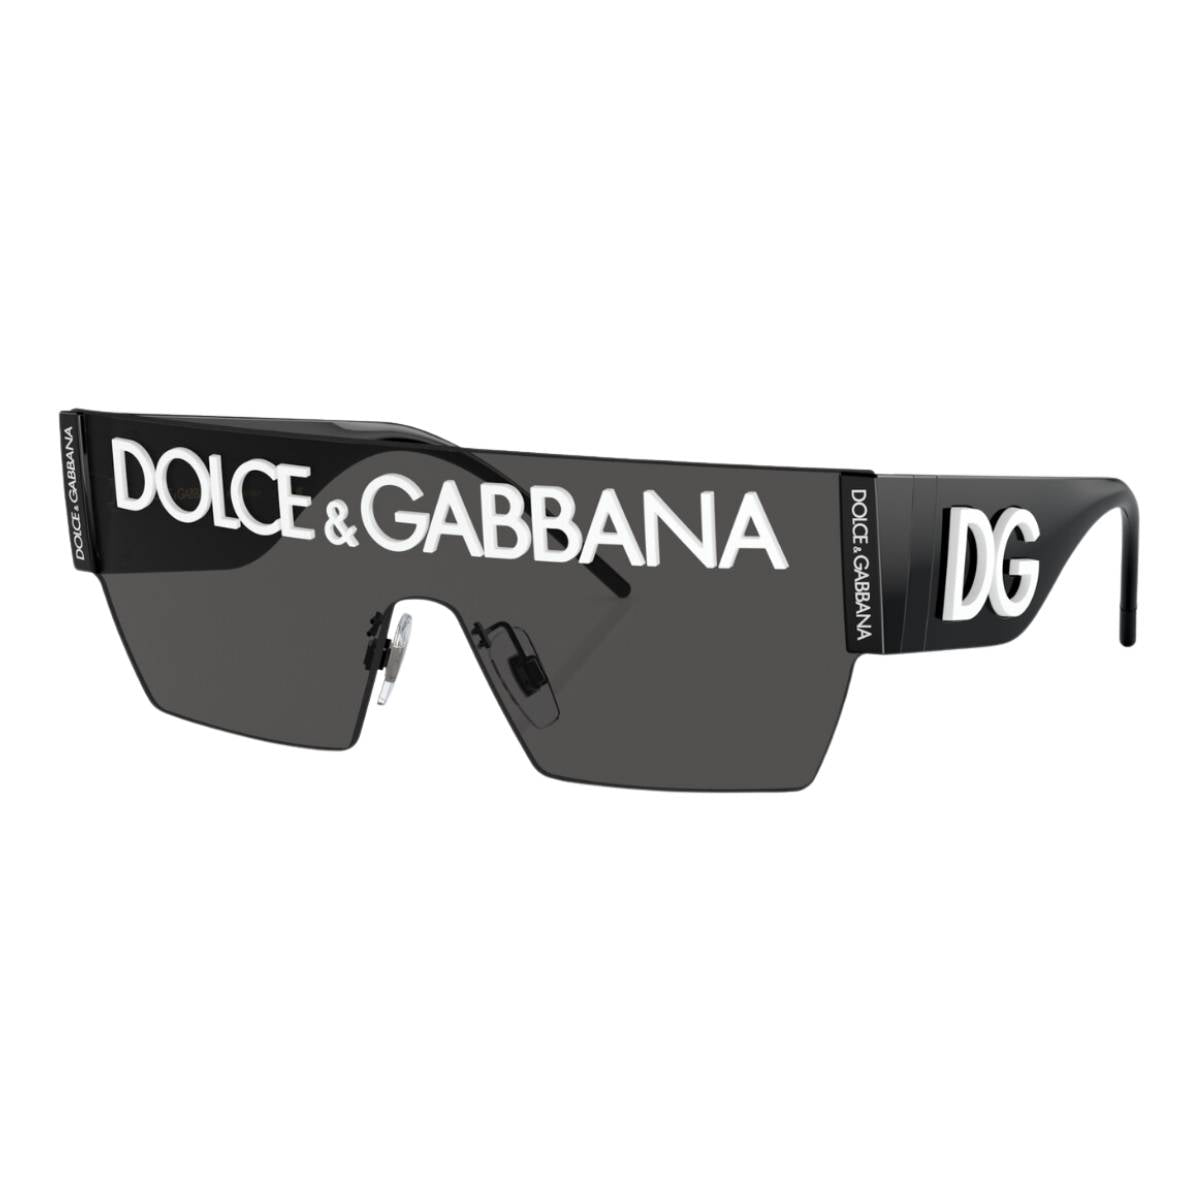 "Buy Stylish Dolce & Gabbana Sunglasses For Men & Women At Optorium"